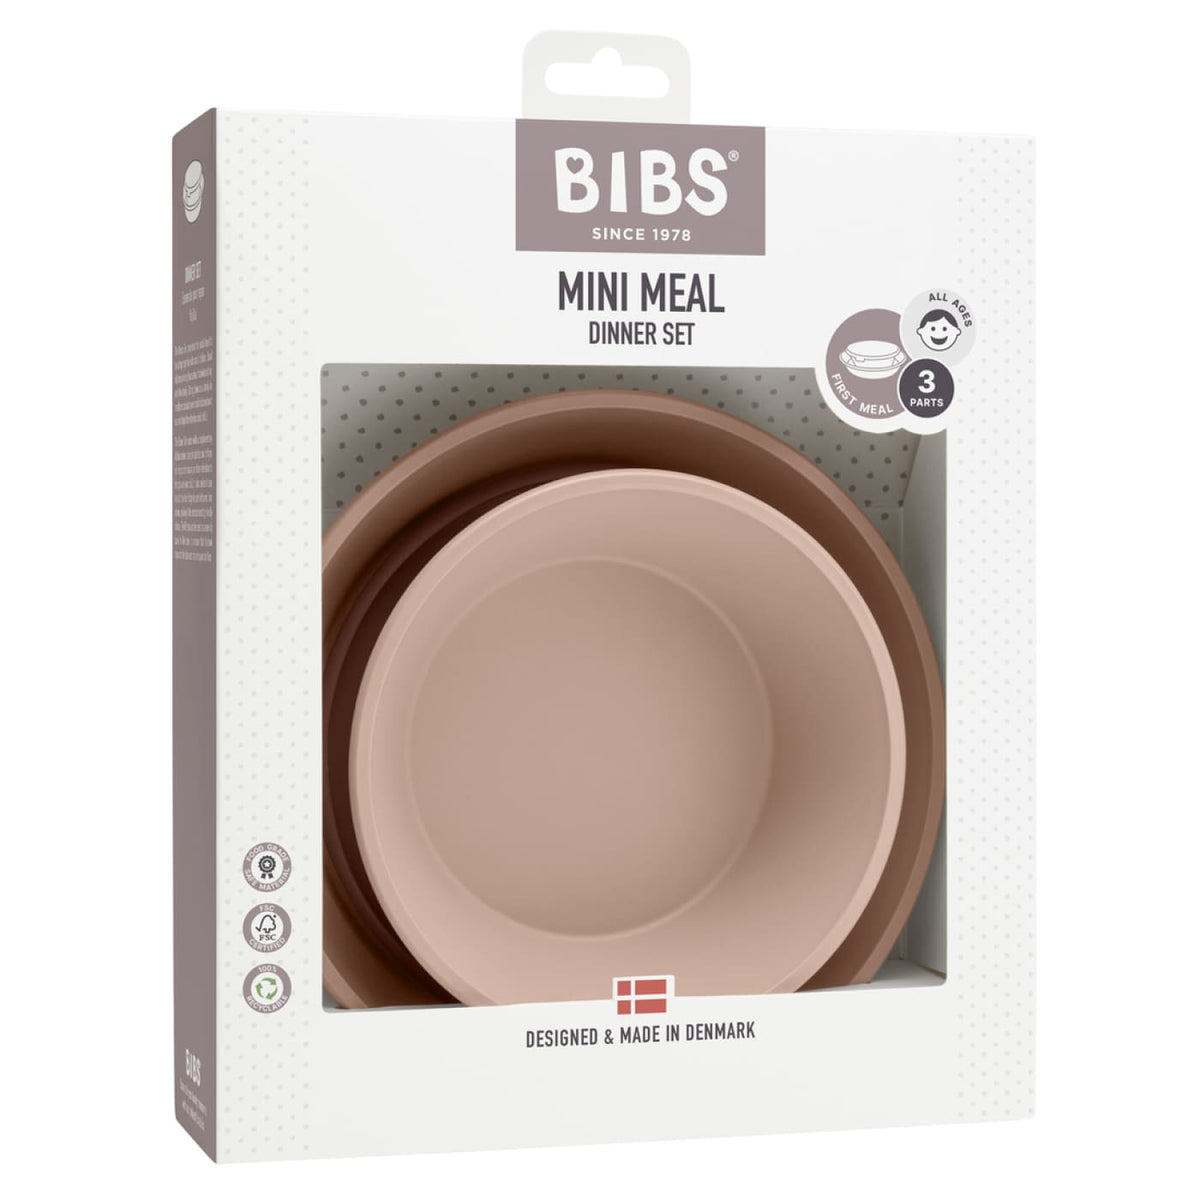 BIBS Dinner Plate Set - Blush - Blush - NURSING &amp; FEEDING - CUTLERY/PLATES/BOWLS/TOYS